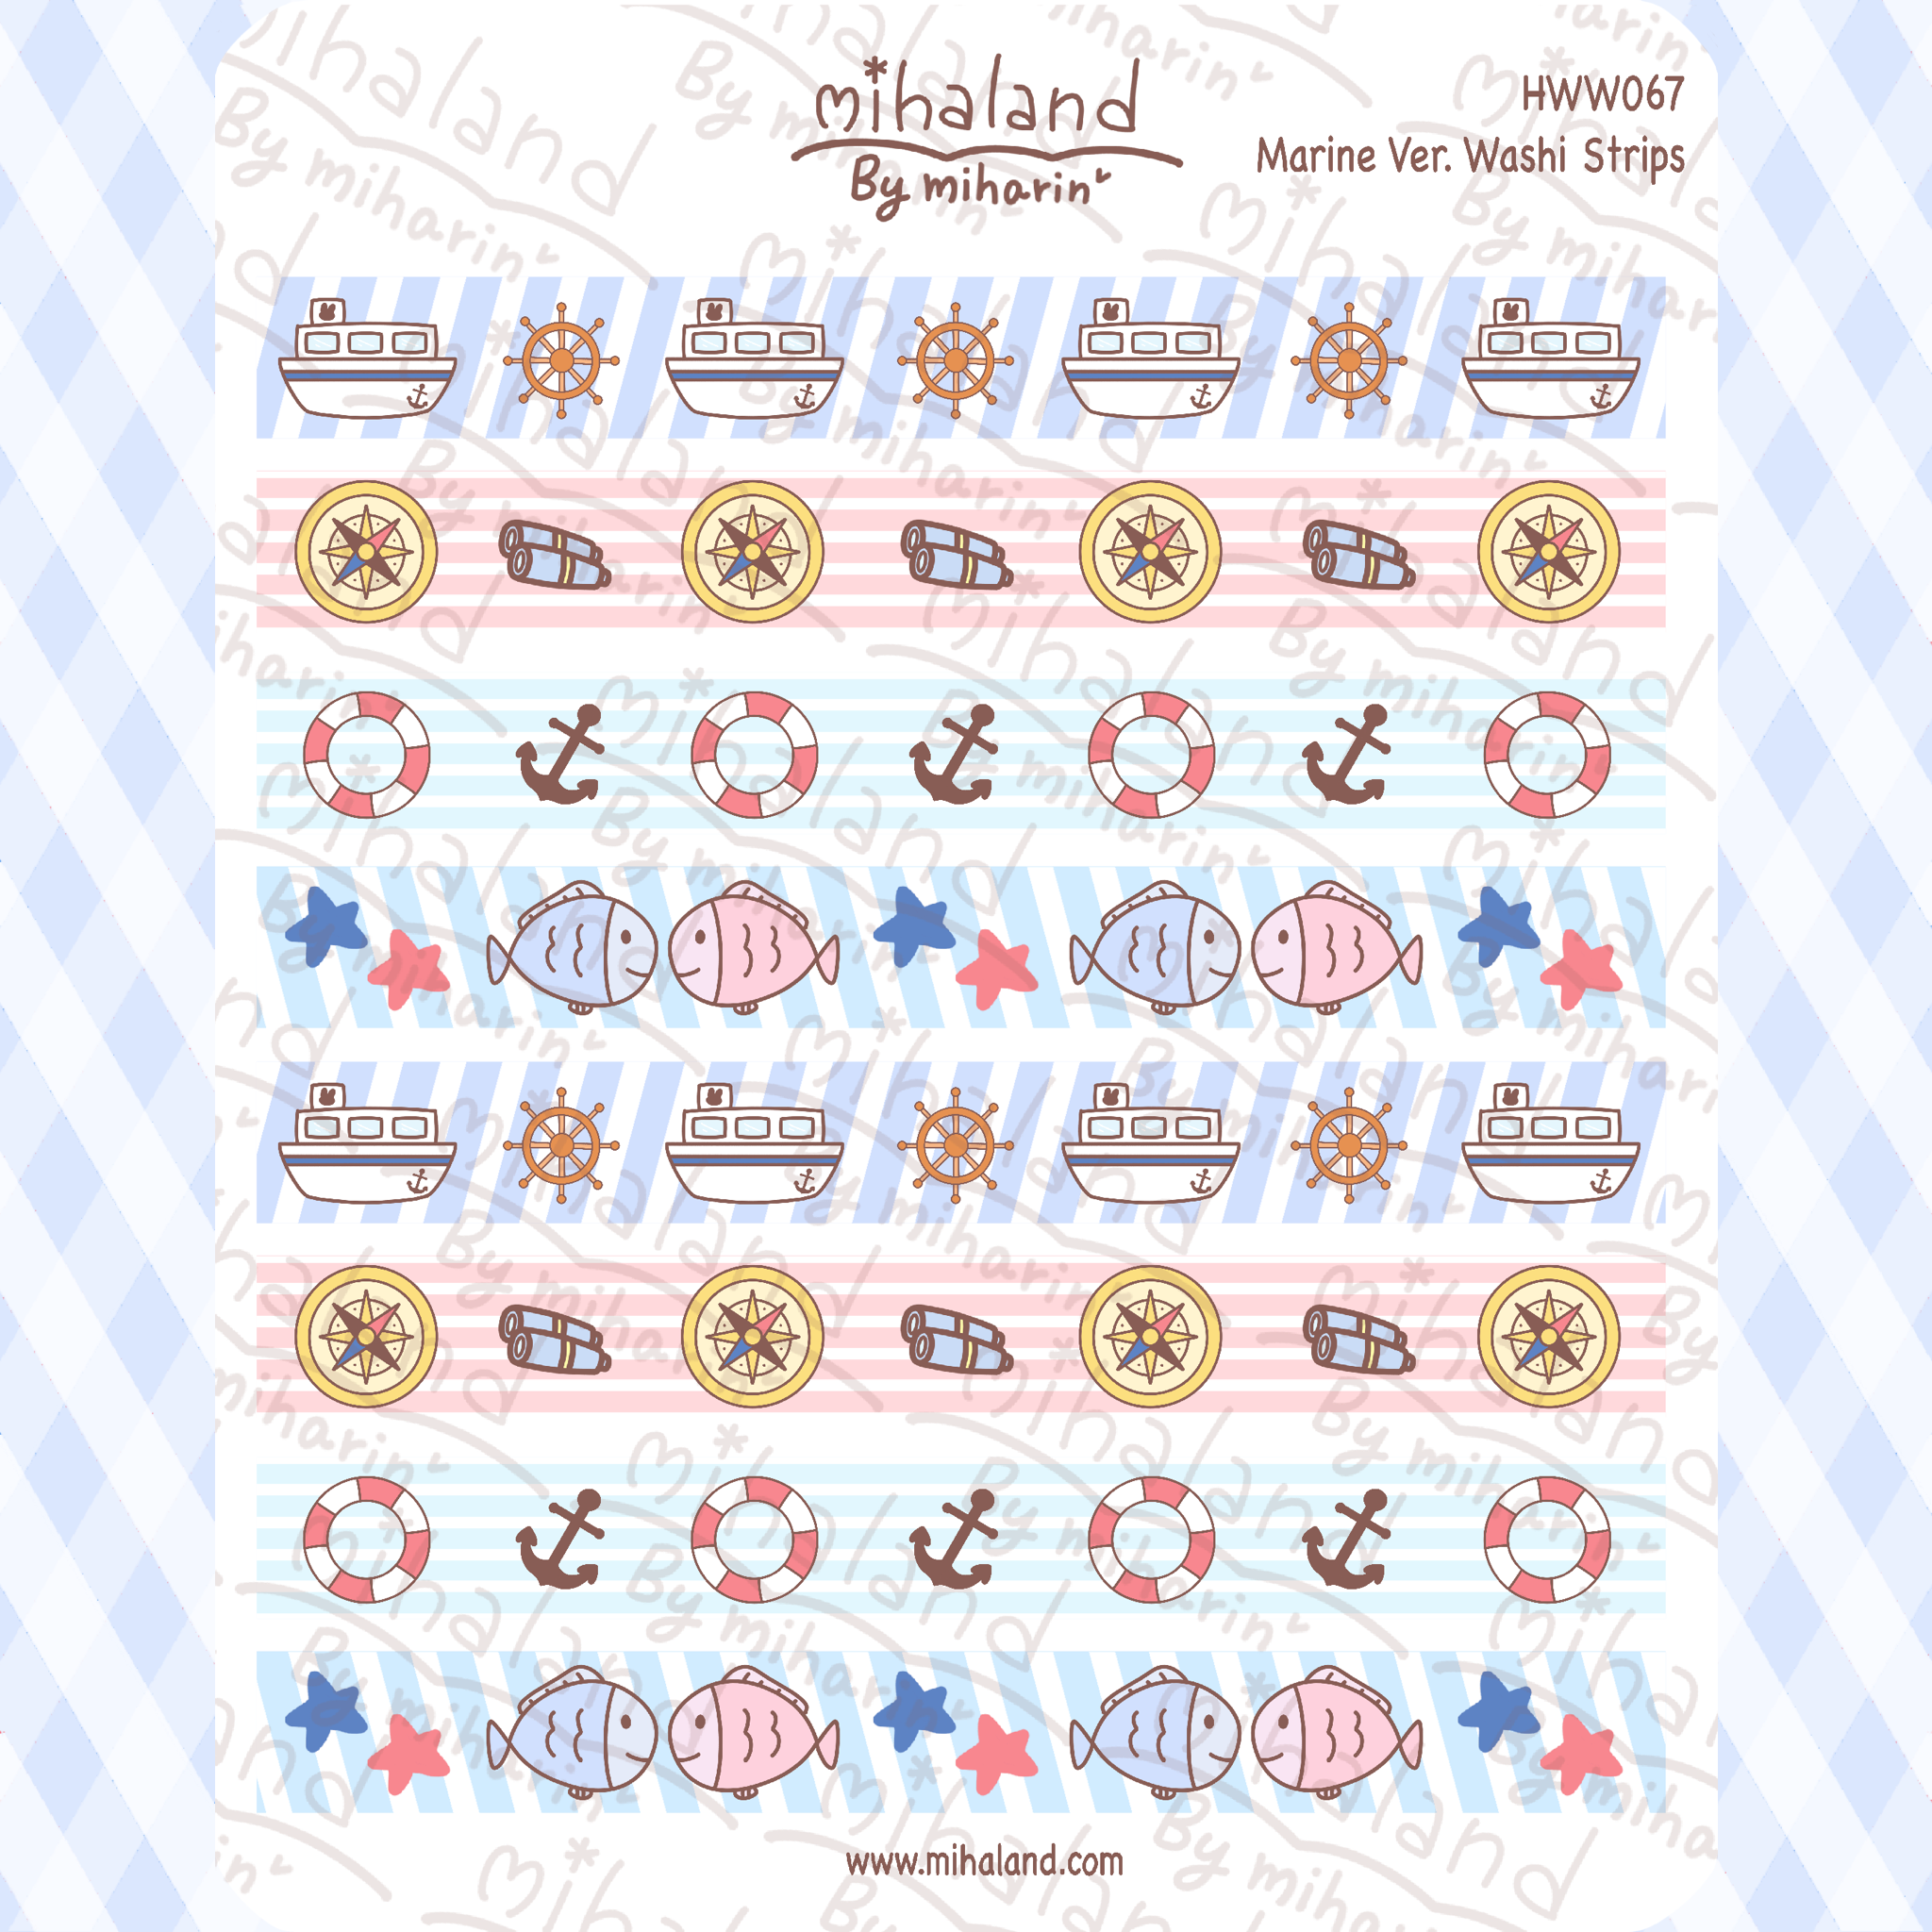 Marine Ver. Washi Strips for Hobonichi Weeks Planner Stickers (HWW067)